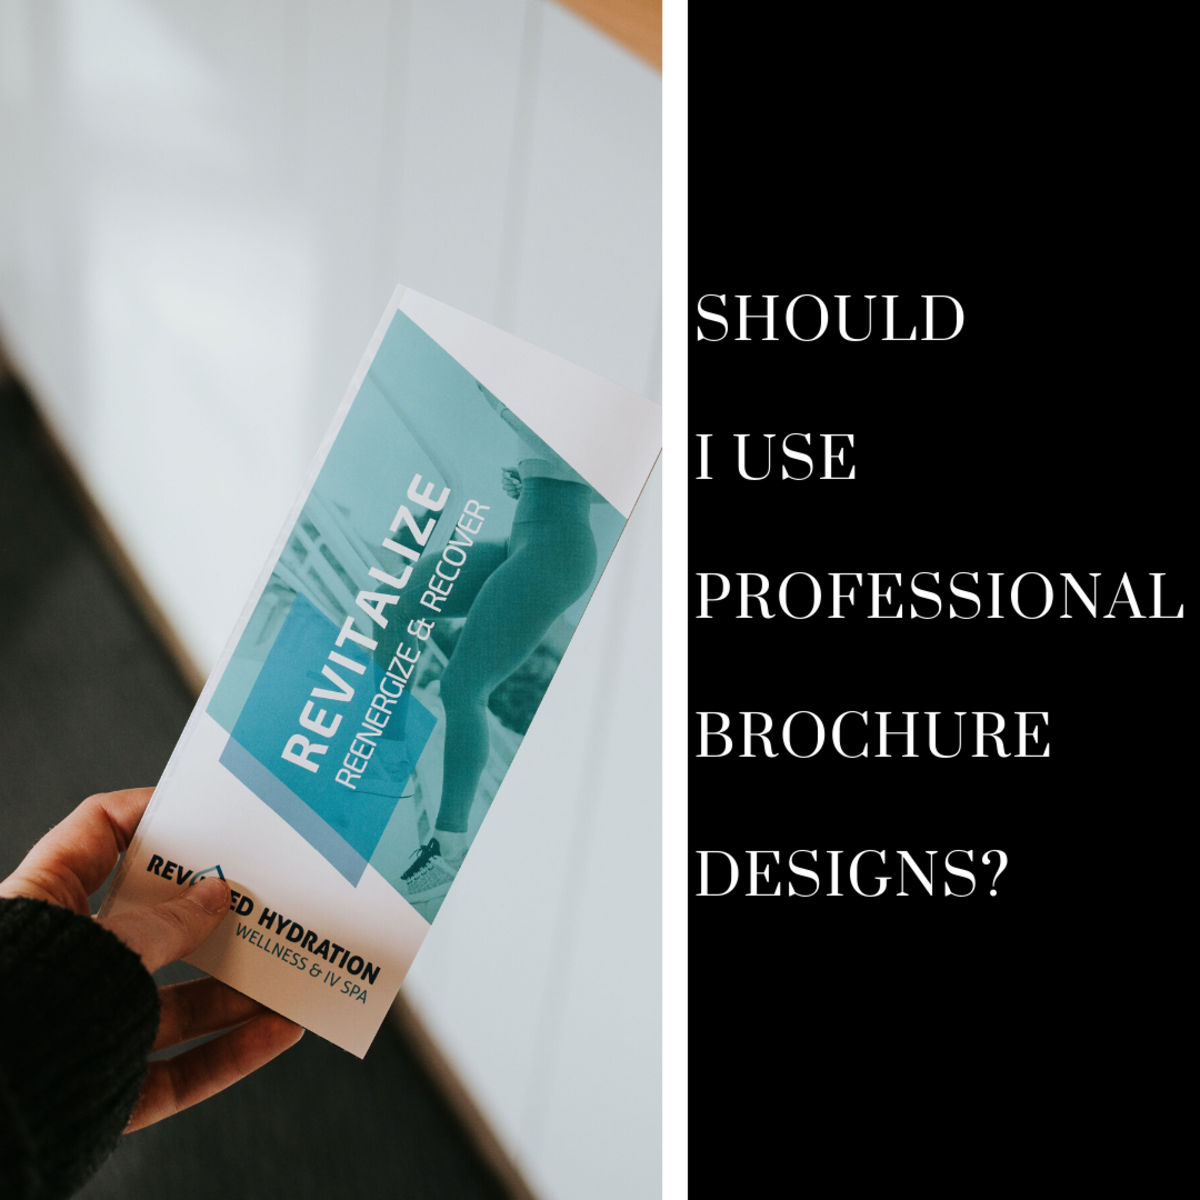 Should I Use Professional Brochure Designs?